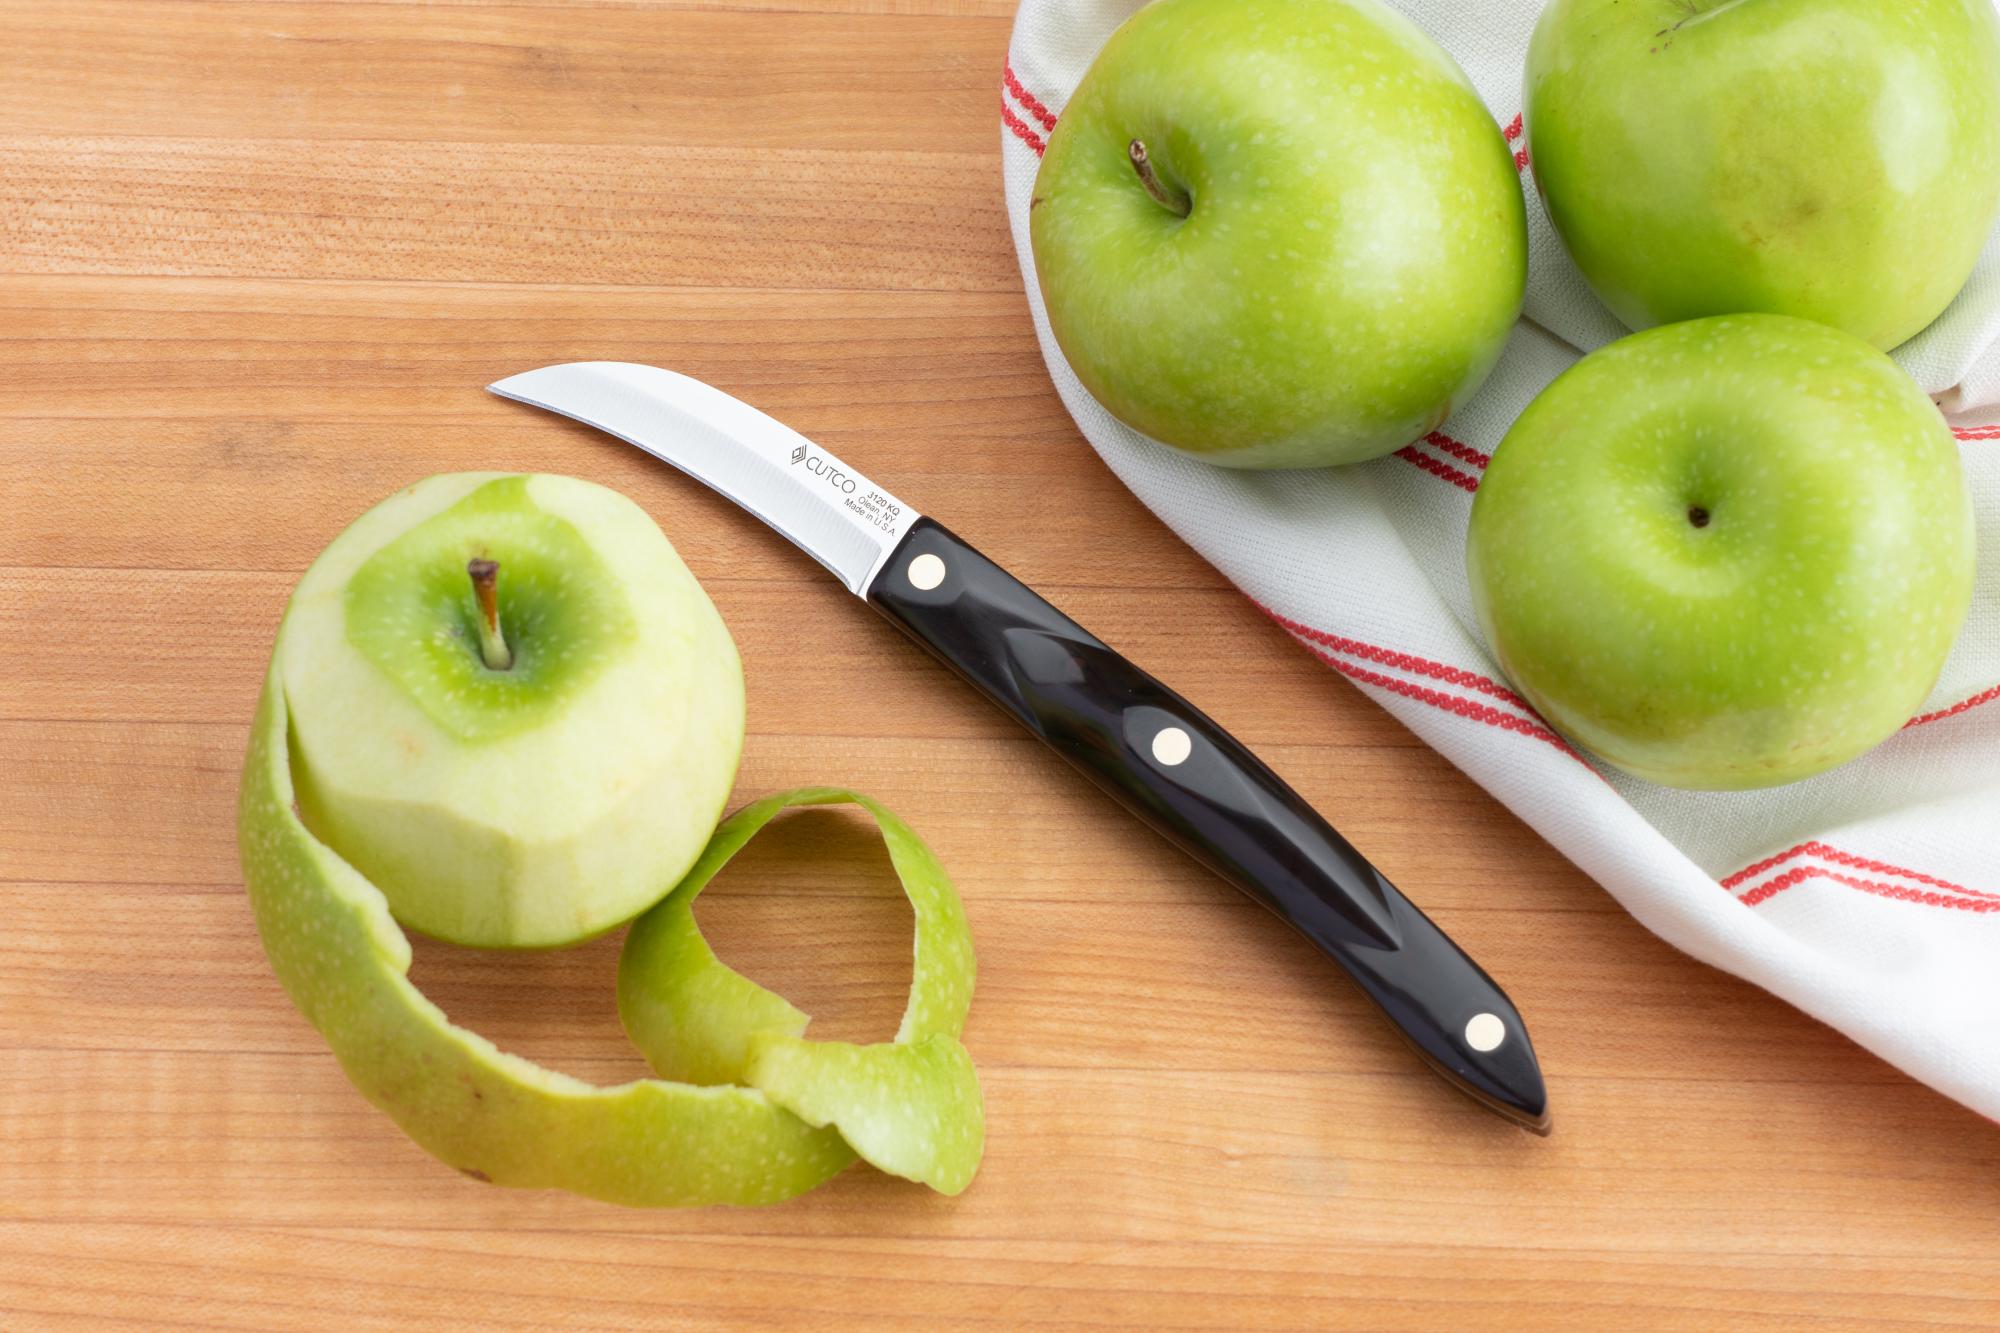 Using a Birds Beak Paring Knife to peel the apples.